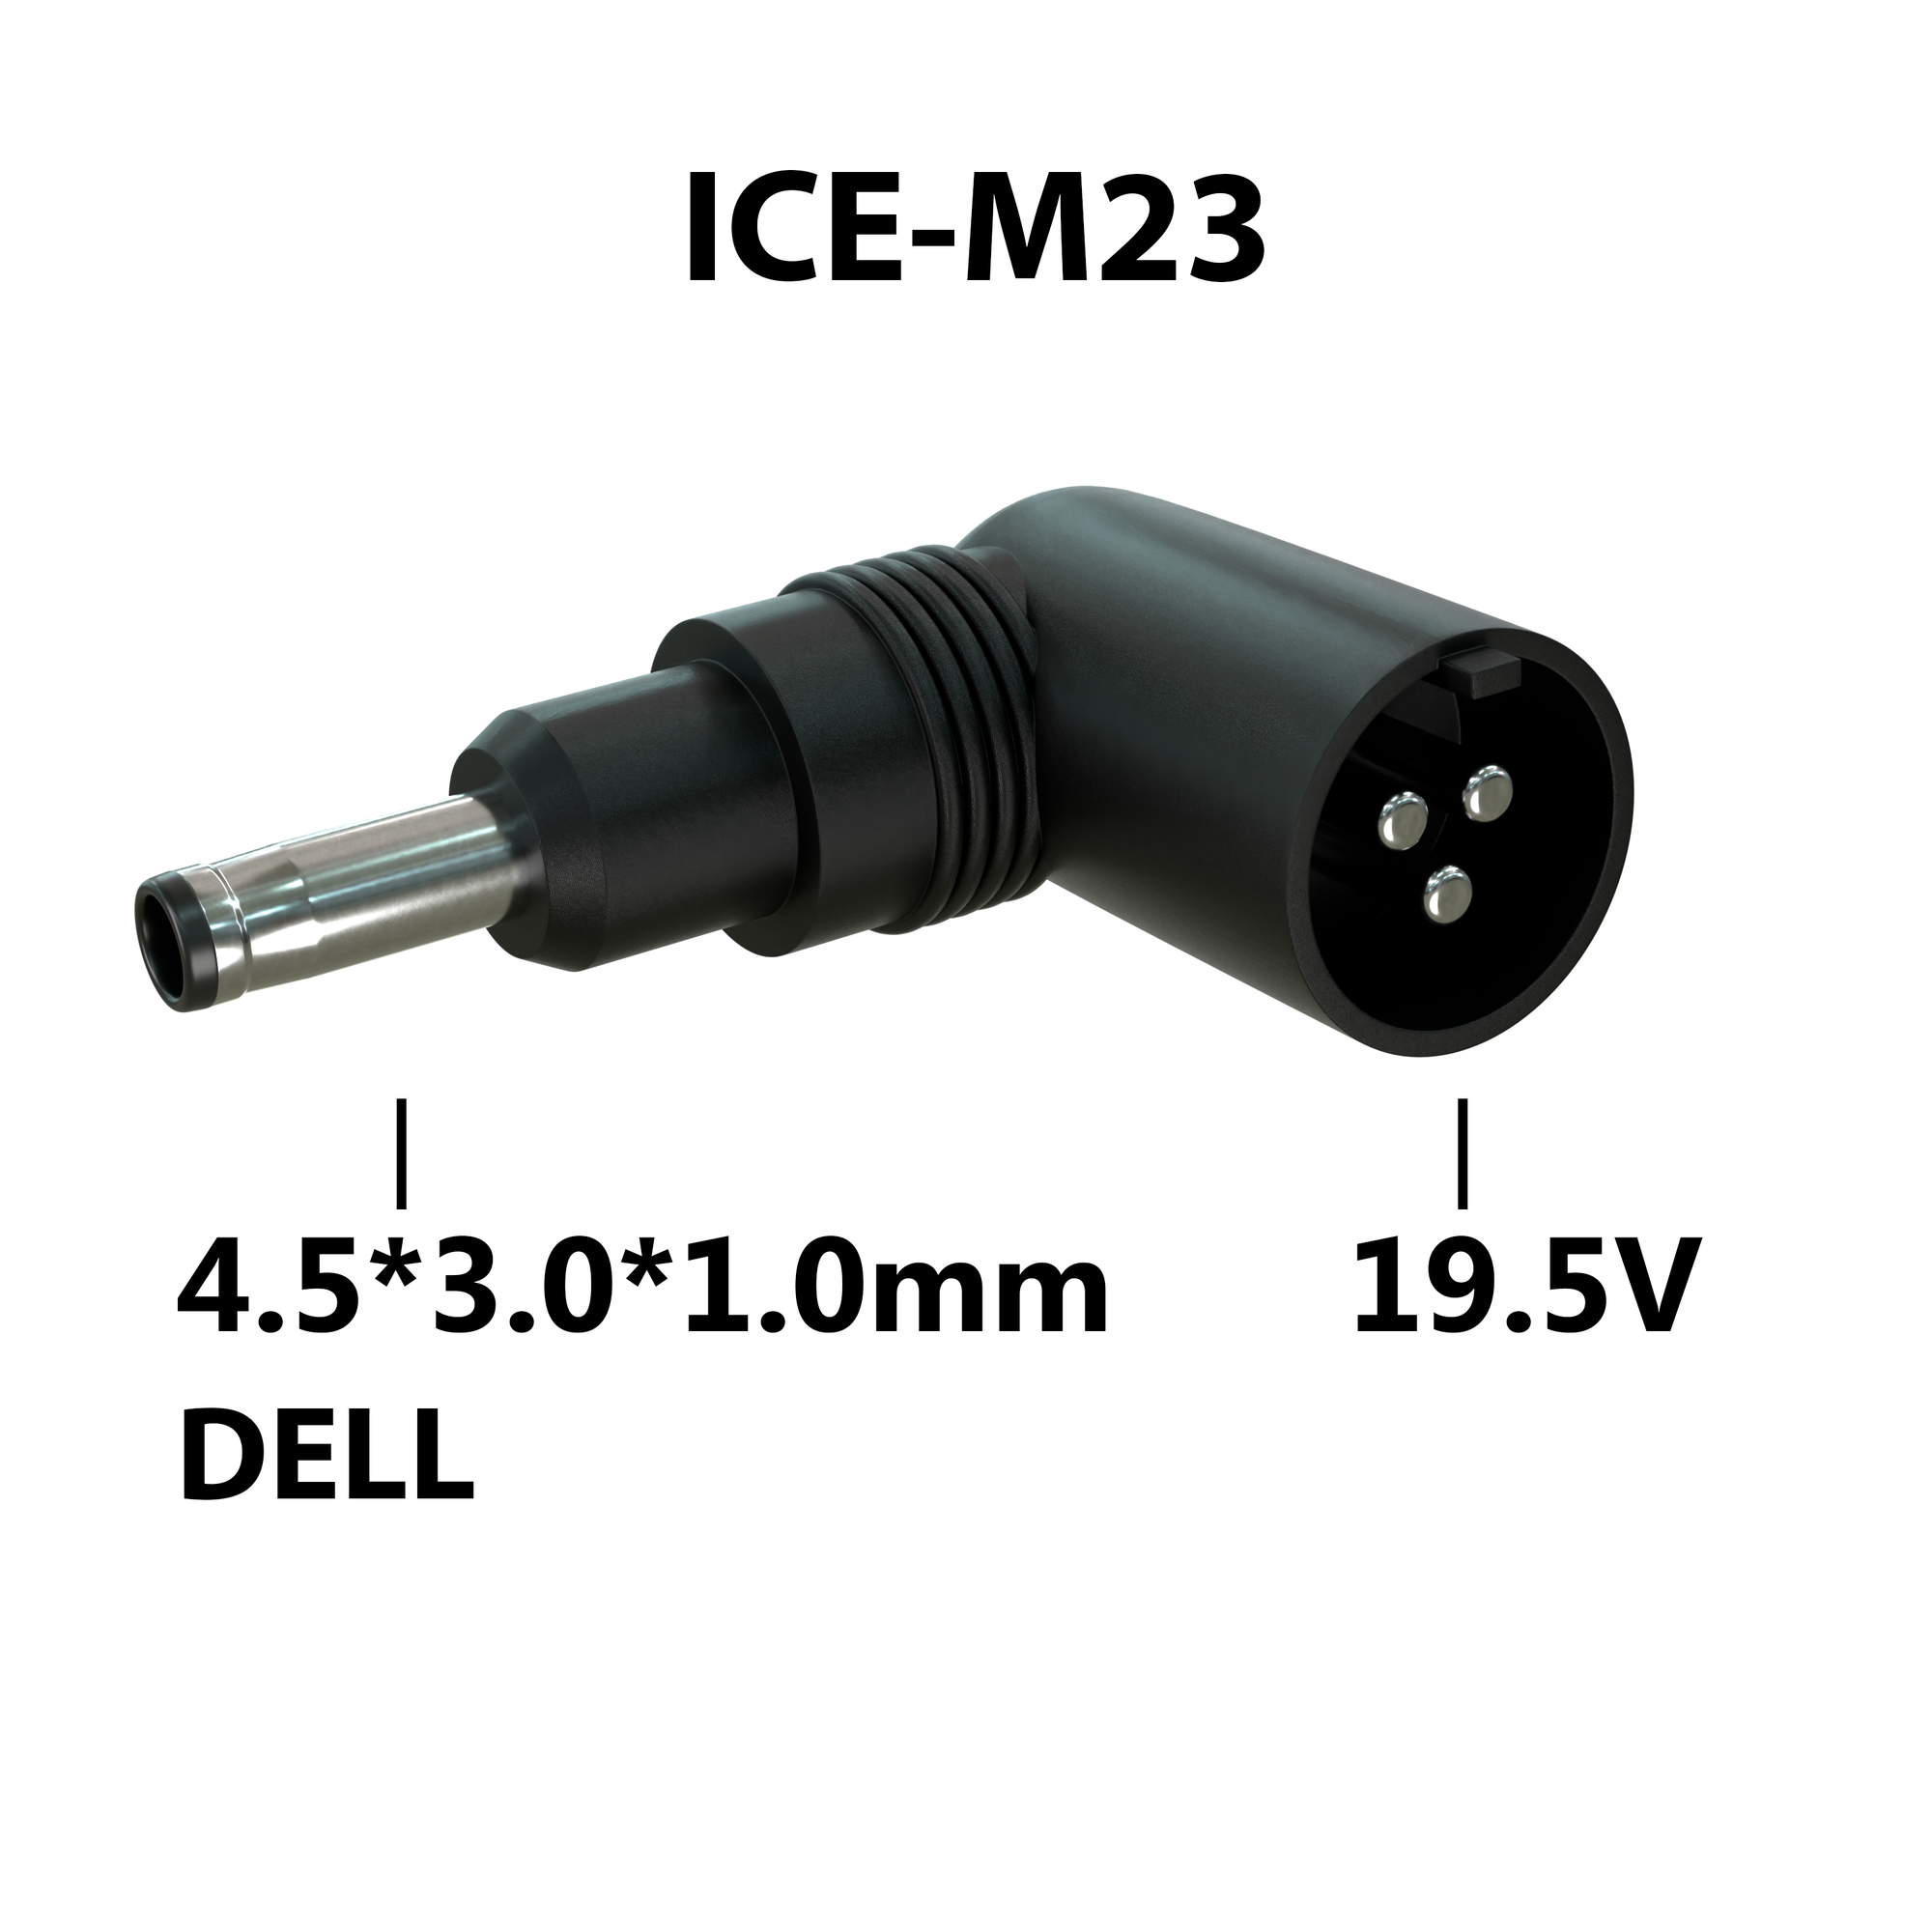 Коннектор адаптер переходник питания для ноутбука DELL ICEPAD ICE-M23 гнездо 3 pin 195V - штекер 45*30*10mm угловой